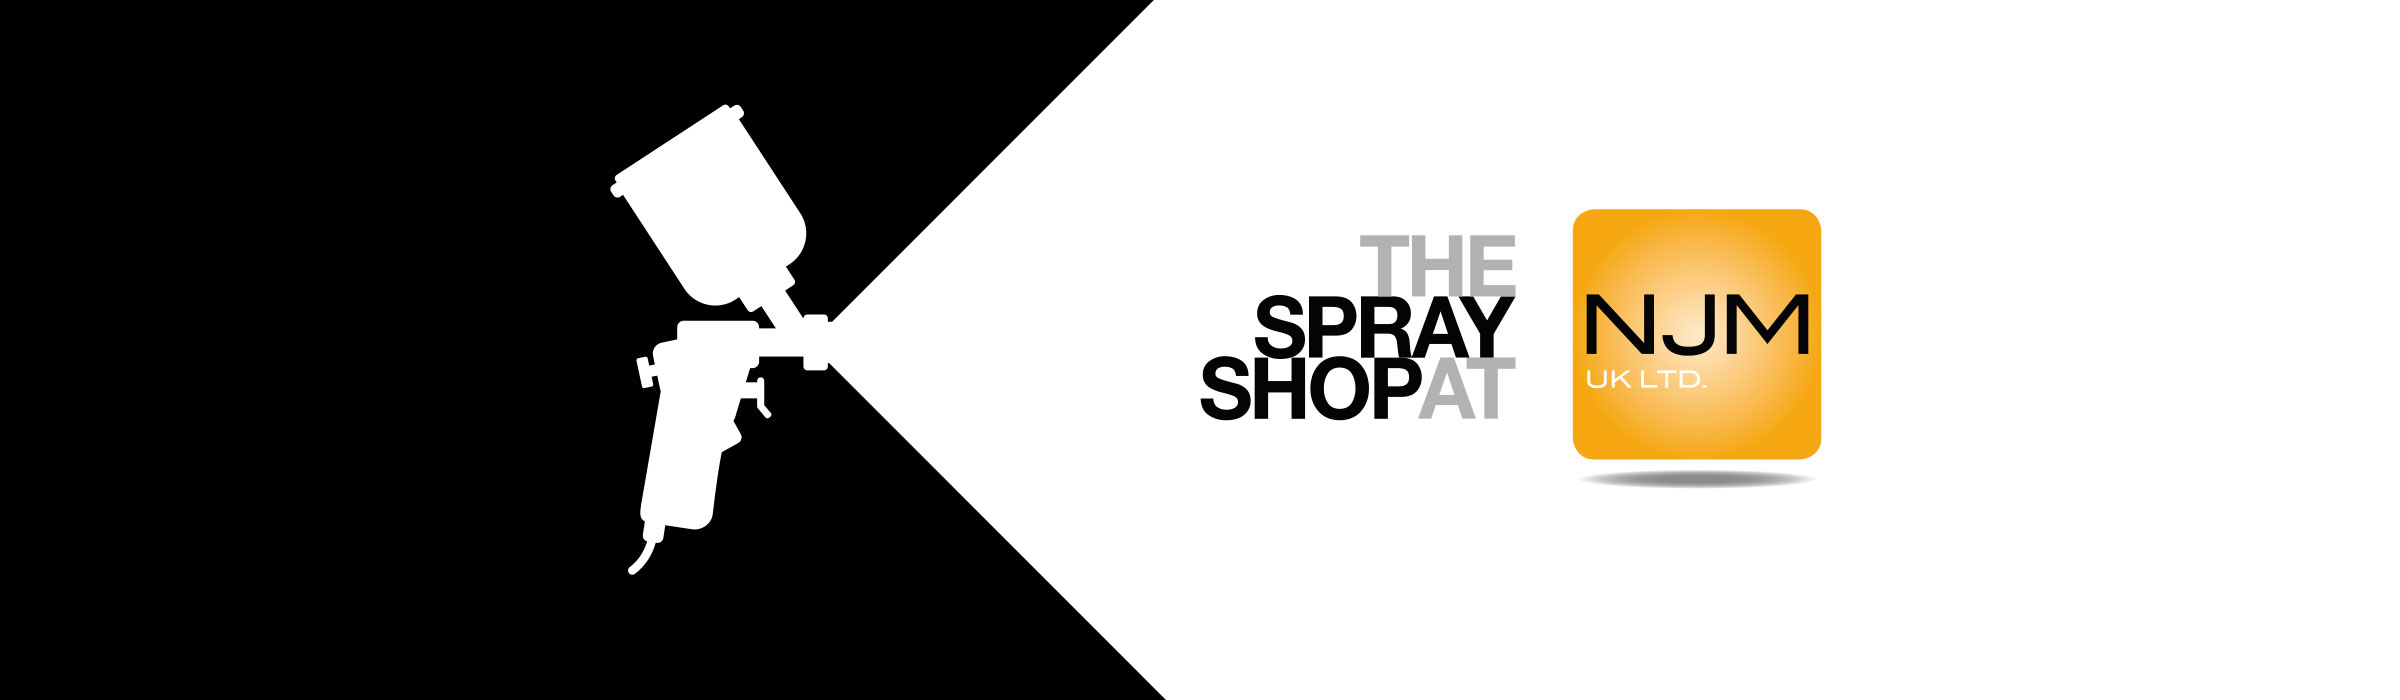 The Spray Shop at NJM